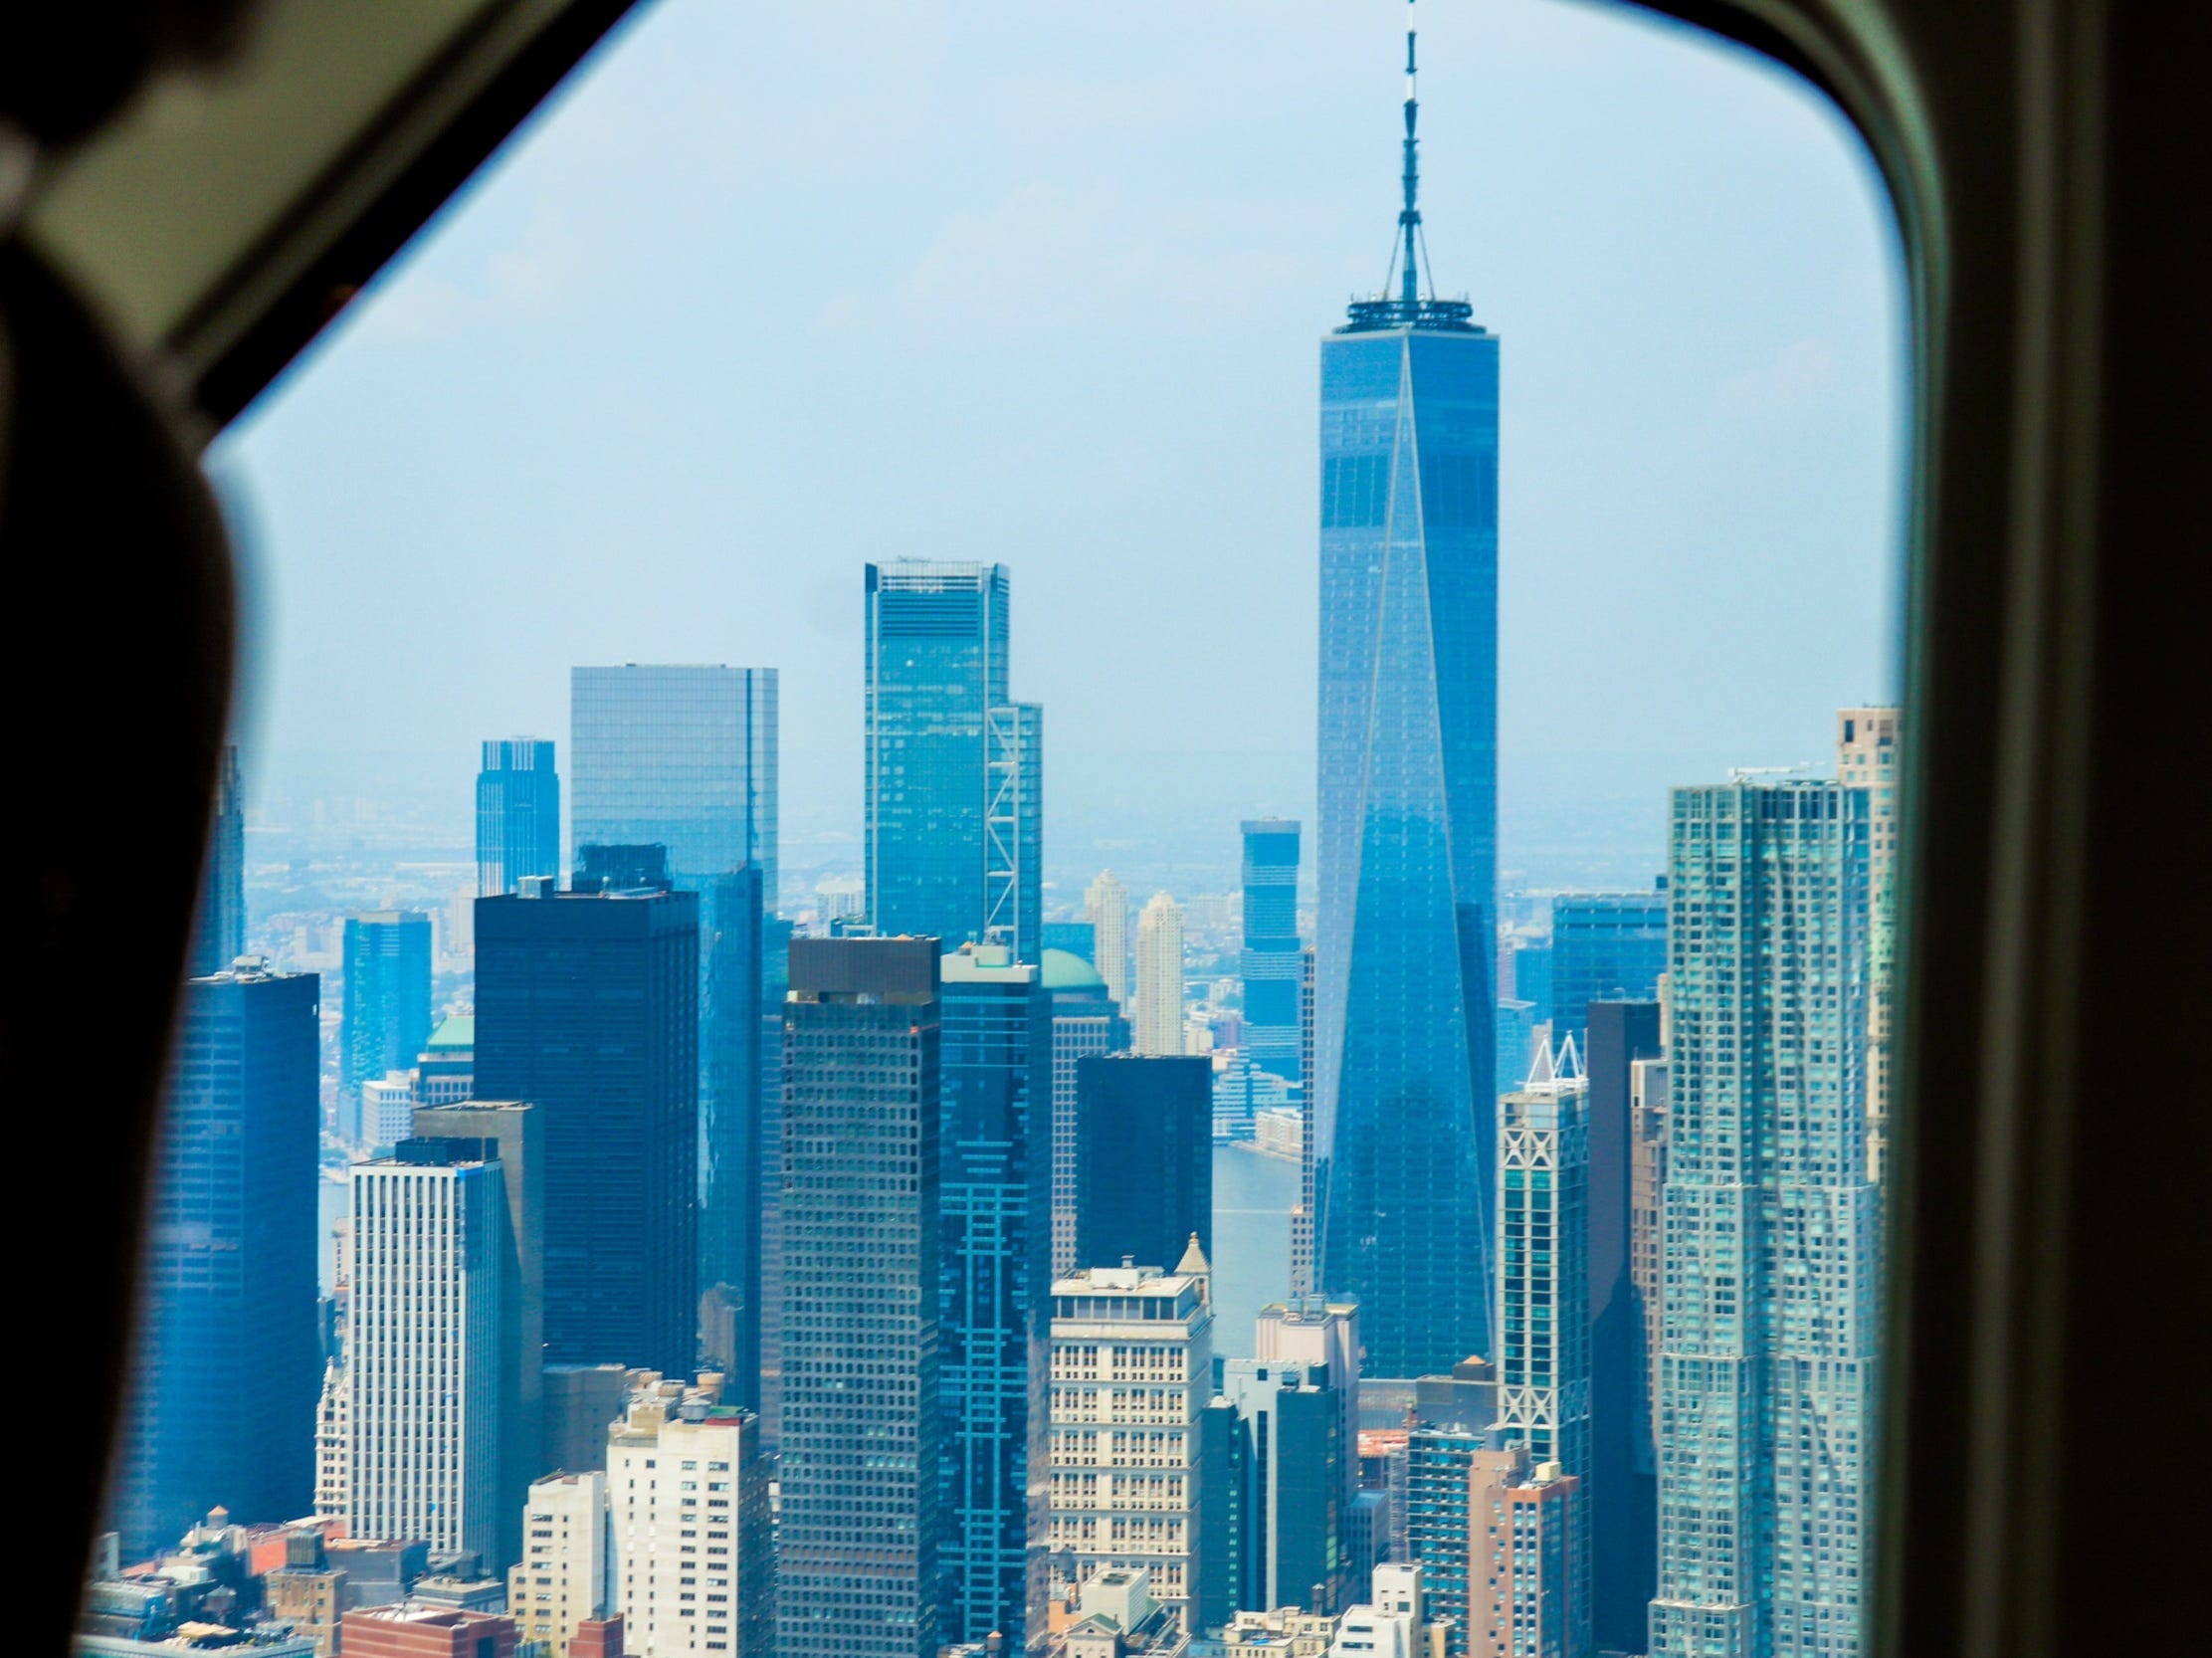 Flying over New York City on a Tailwind Air Cessna Caravan EX seaplane - Tailwind Air seaplane demo flight 2021